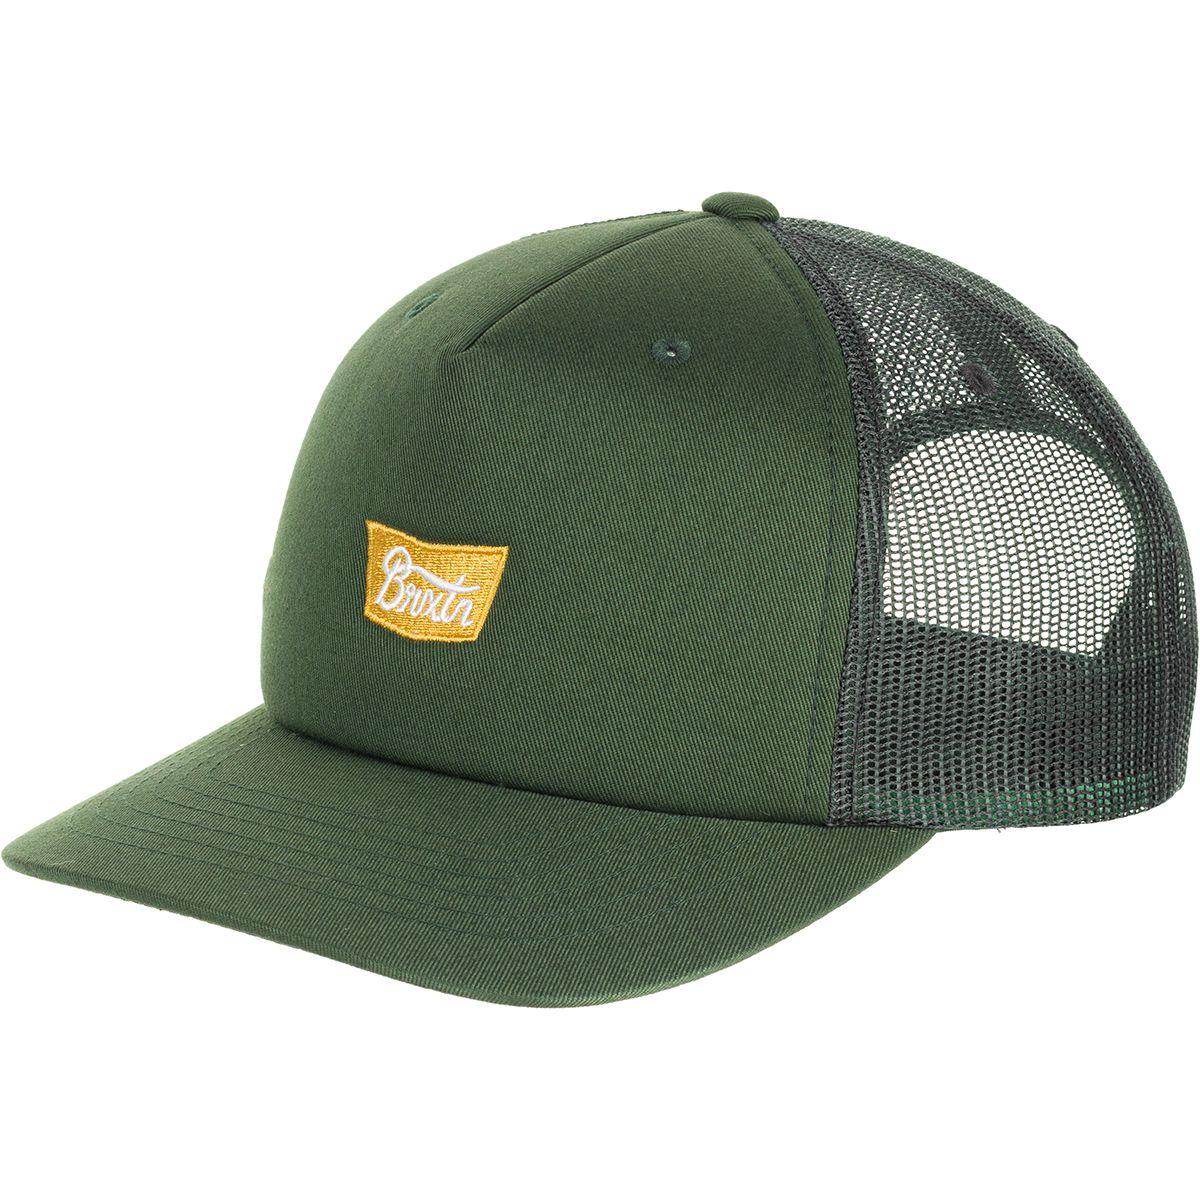 Brixton Cotton Stith Mp Mesh Trucker Hat in Emerald (Green) for Men - Lyst